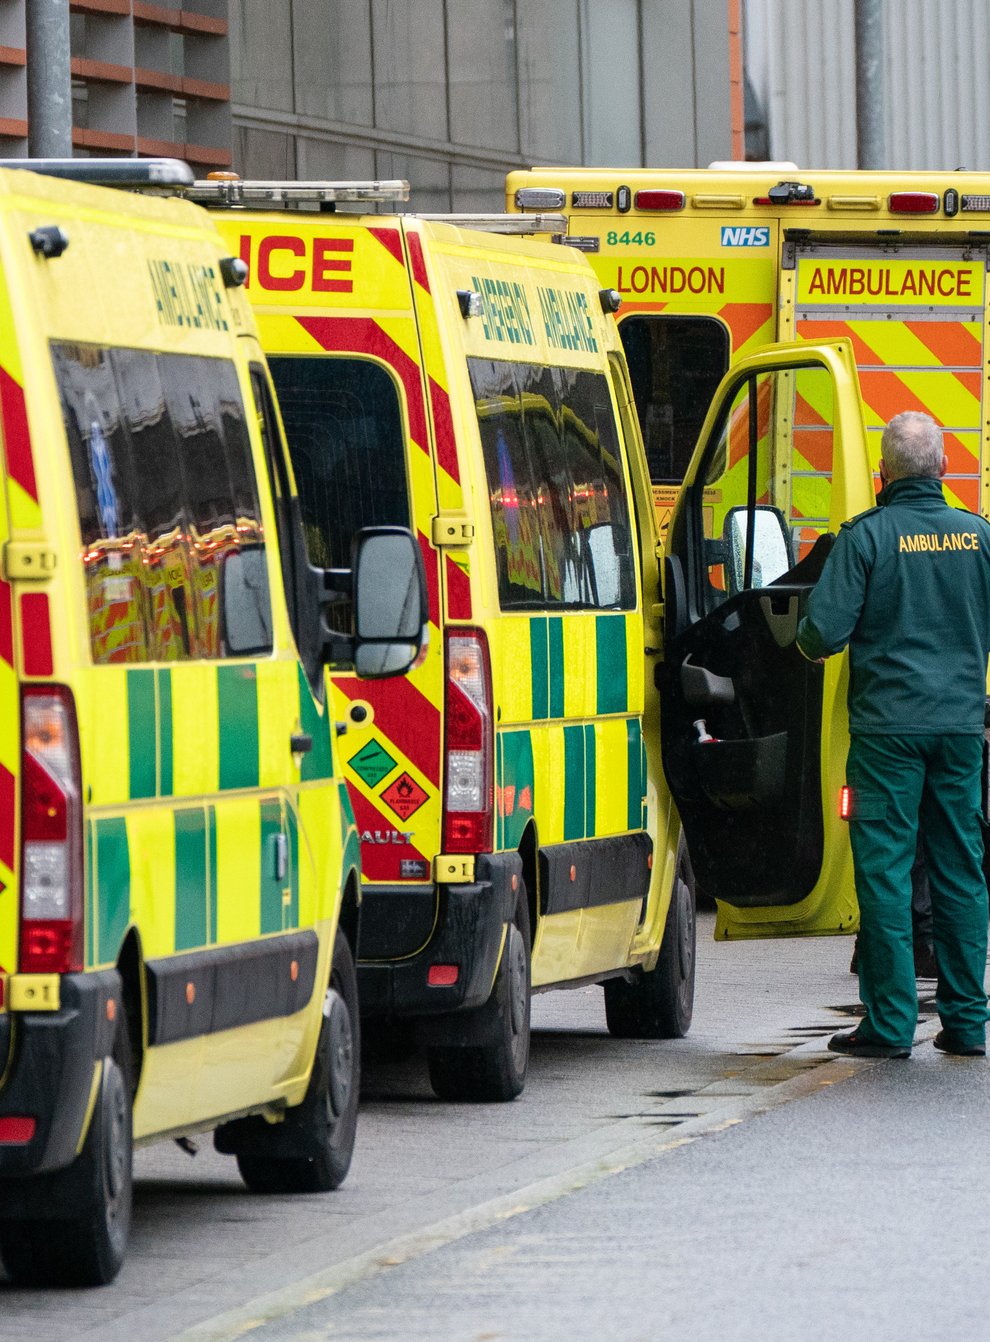 A line of ambulances outside the Royal London Hospital in London (Dominic Lipinski/PA)